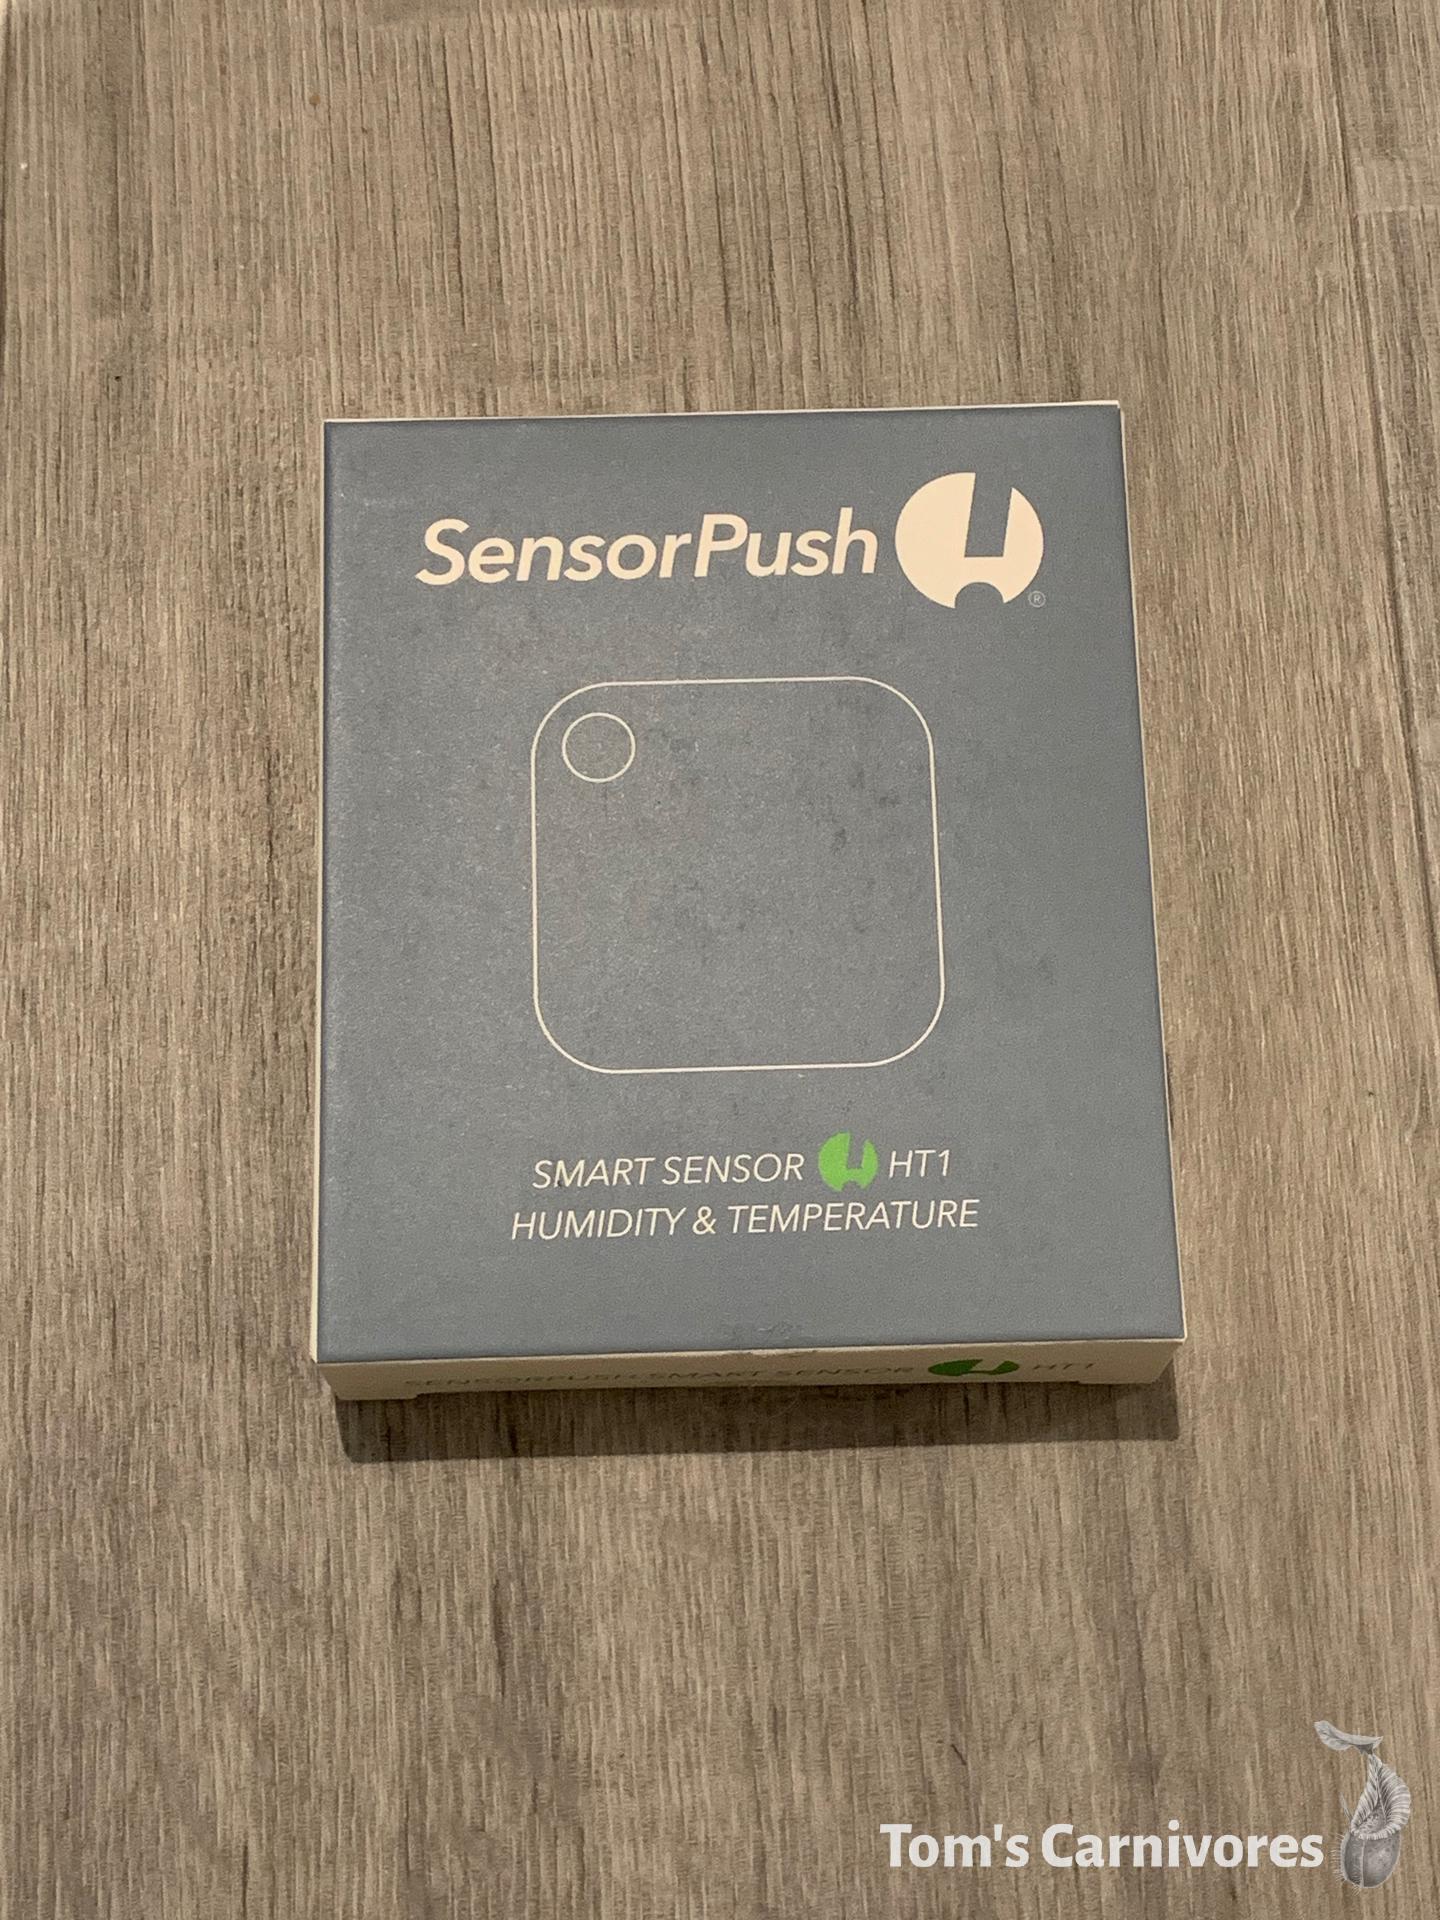 SensorPush G1 WiFi Gateway - Access Your Sensor Data from Anywhere